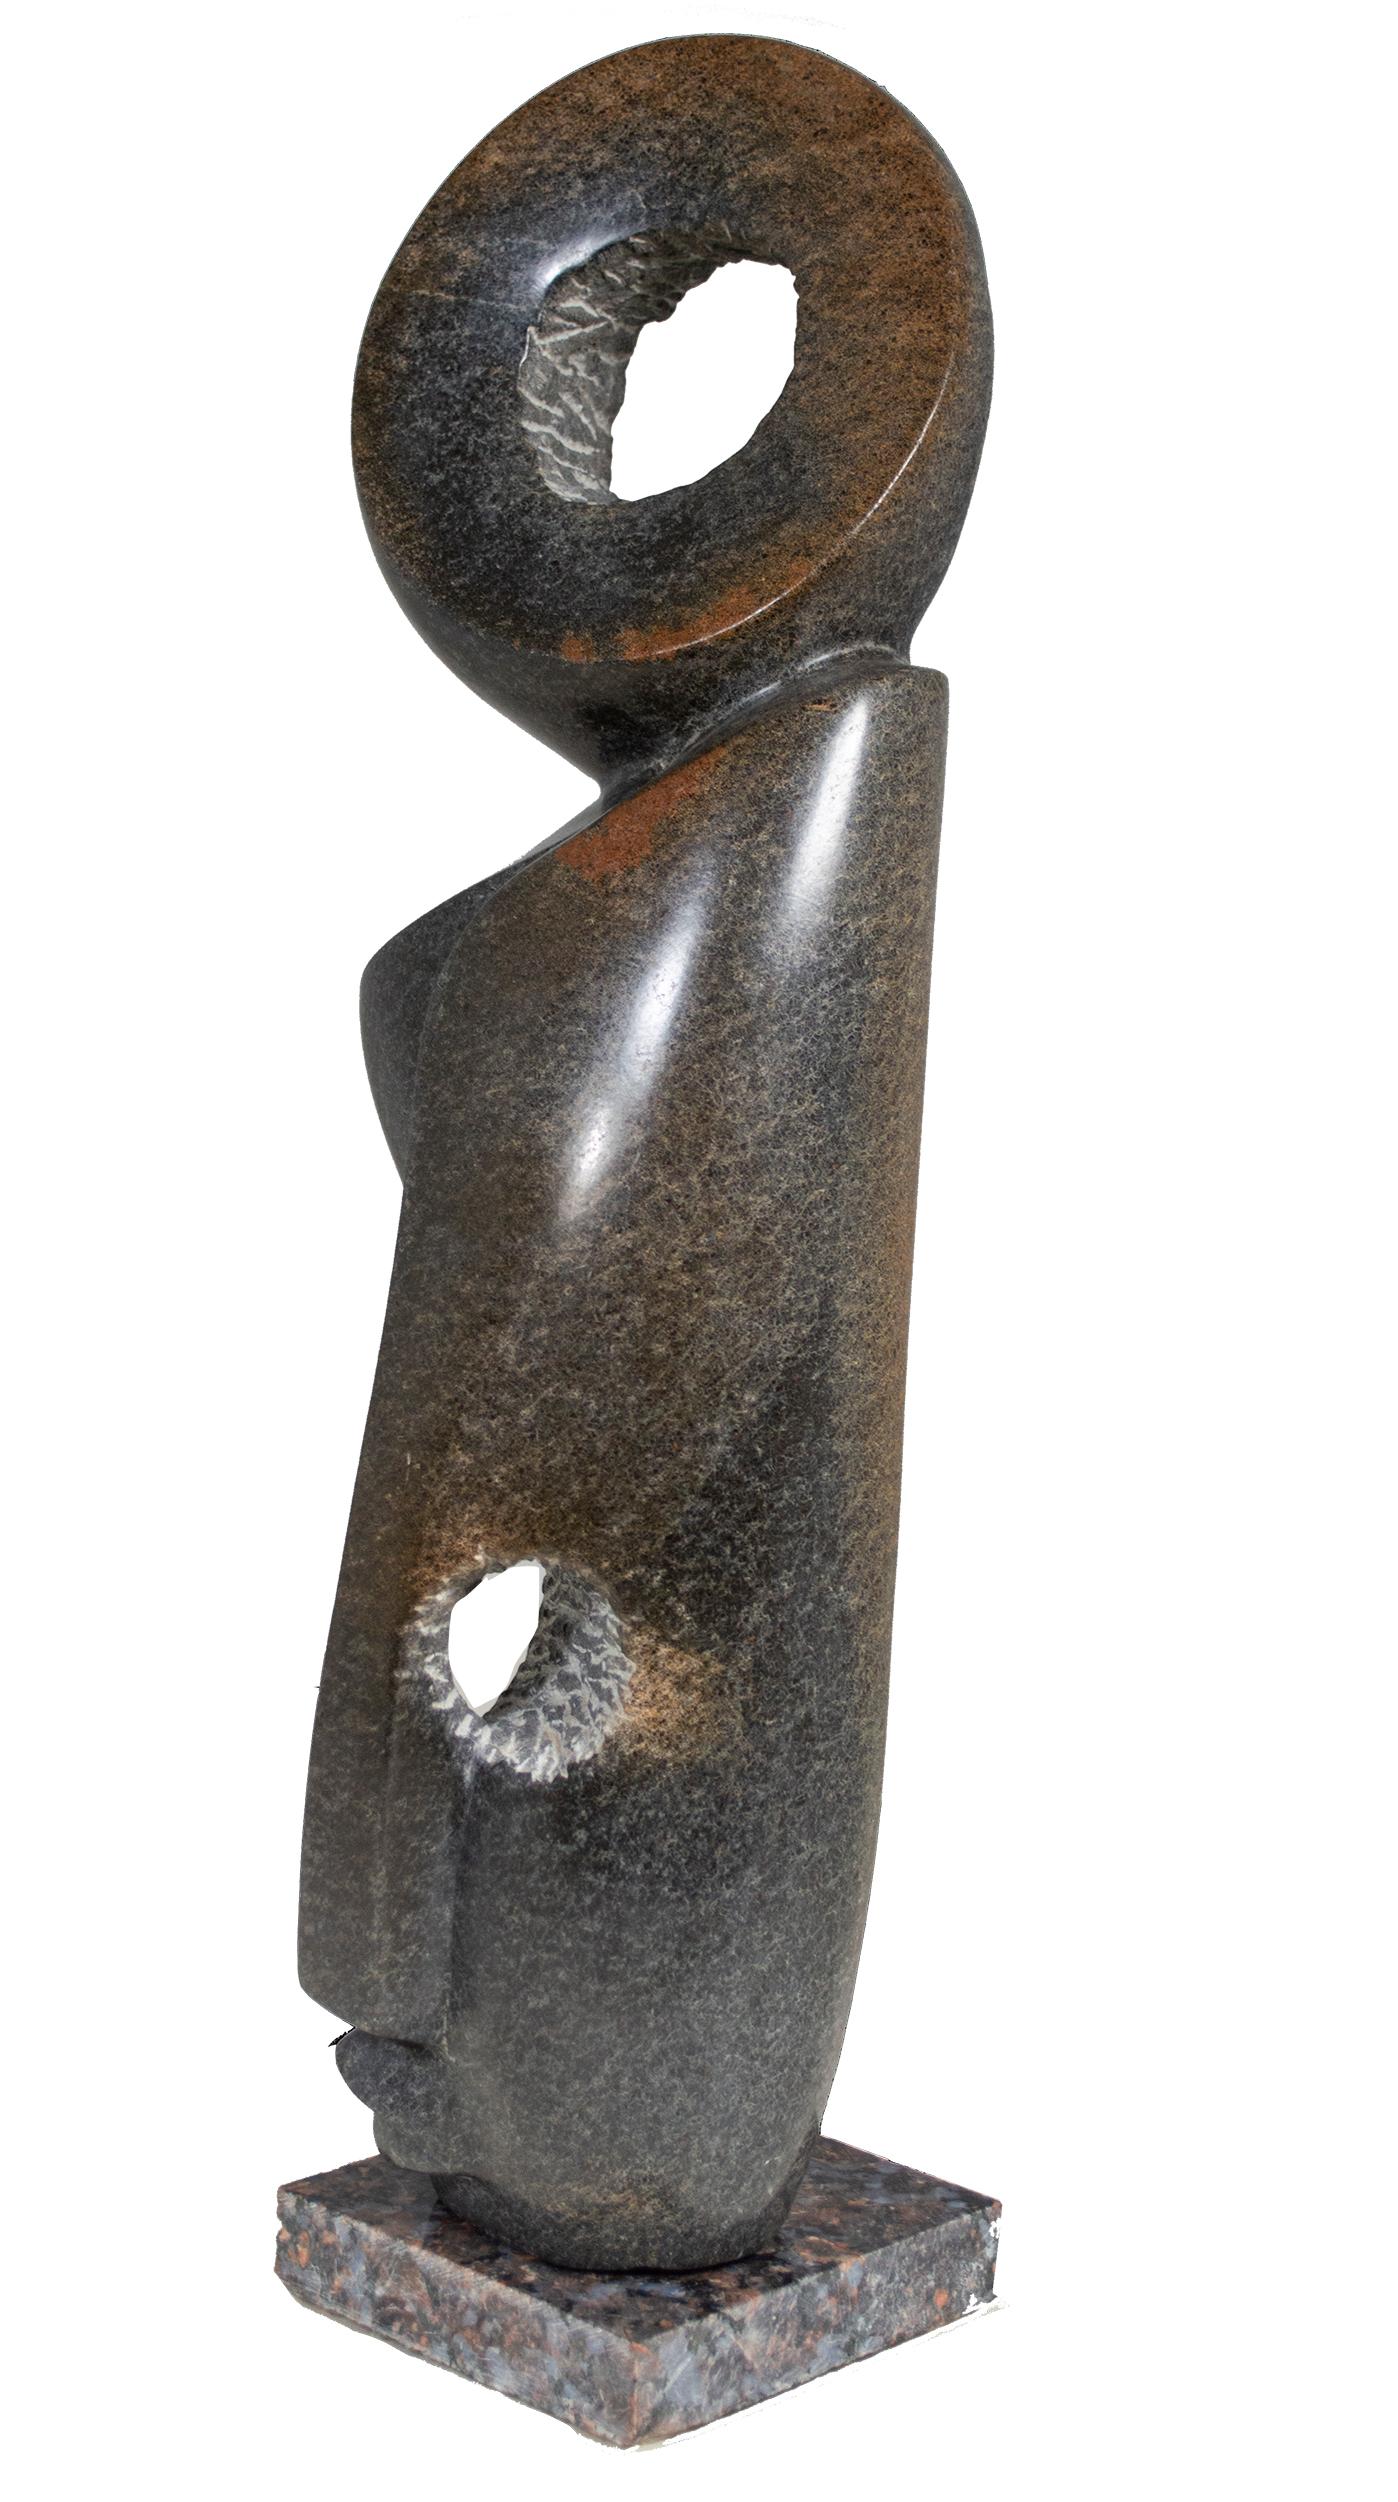 'Protected by Spirits' original stone Shona sculpture by Marowa & Chideu - Sculpture by Tendai Marowa & Stanley Chideu